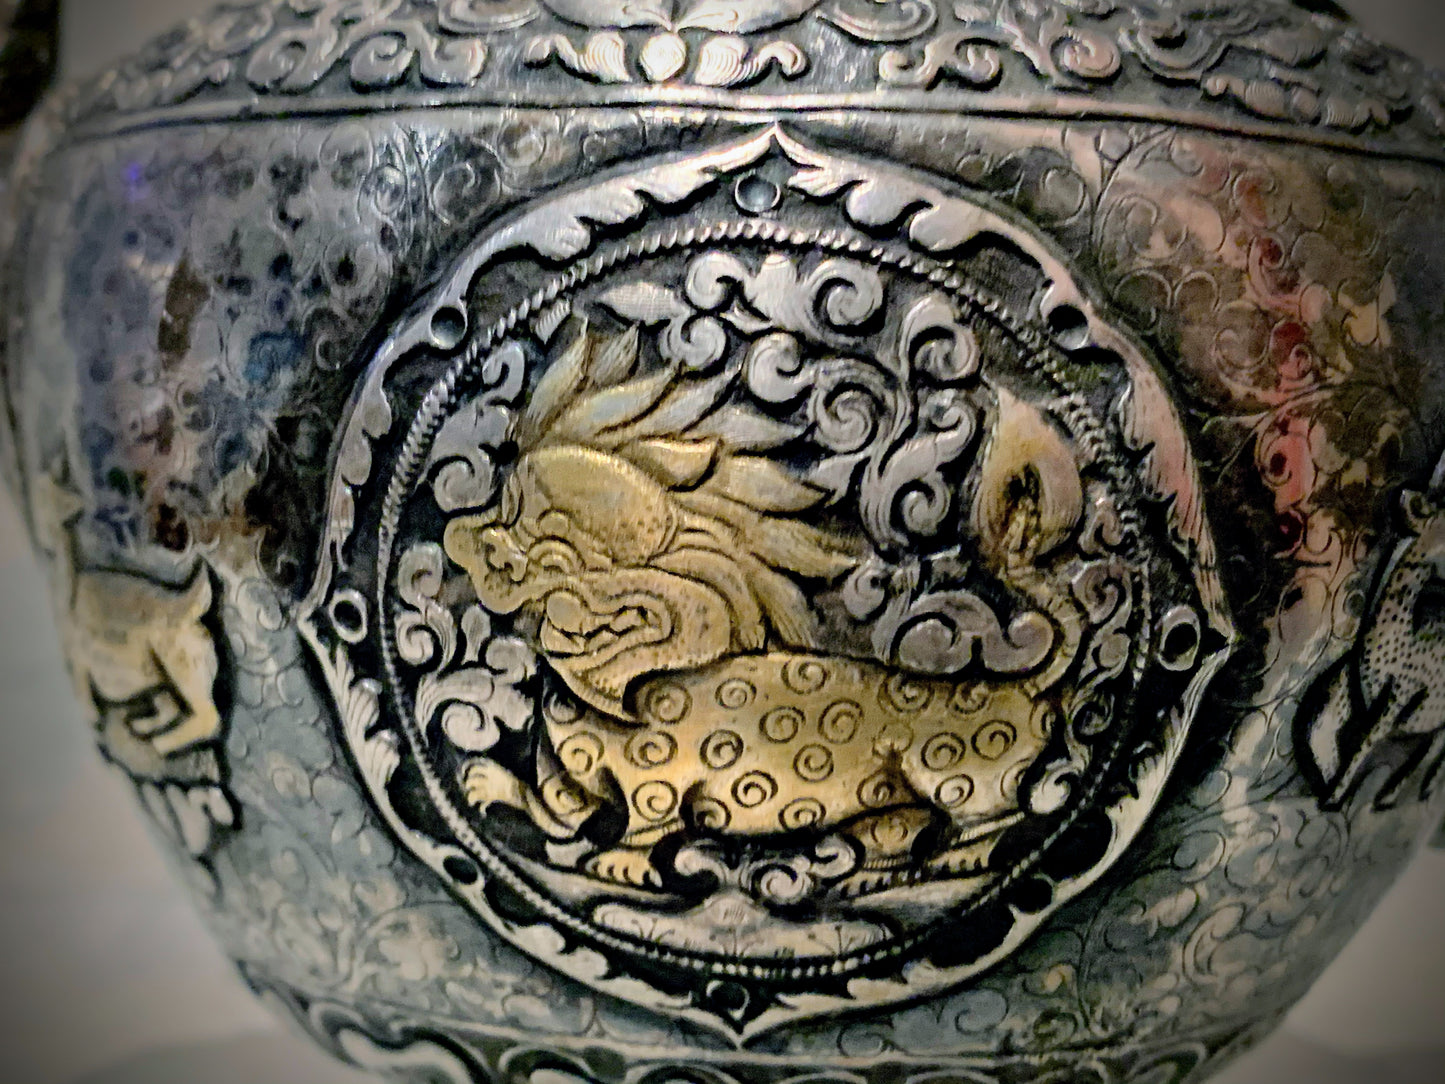 An antique silver and gilt ceremonial Tibetan teapot